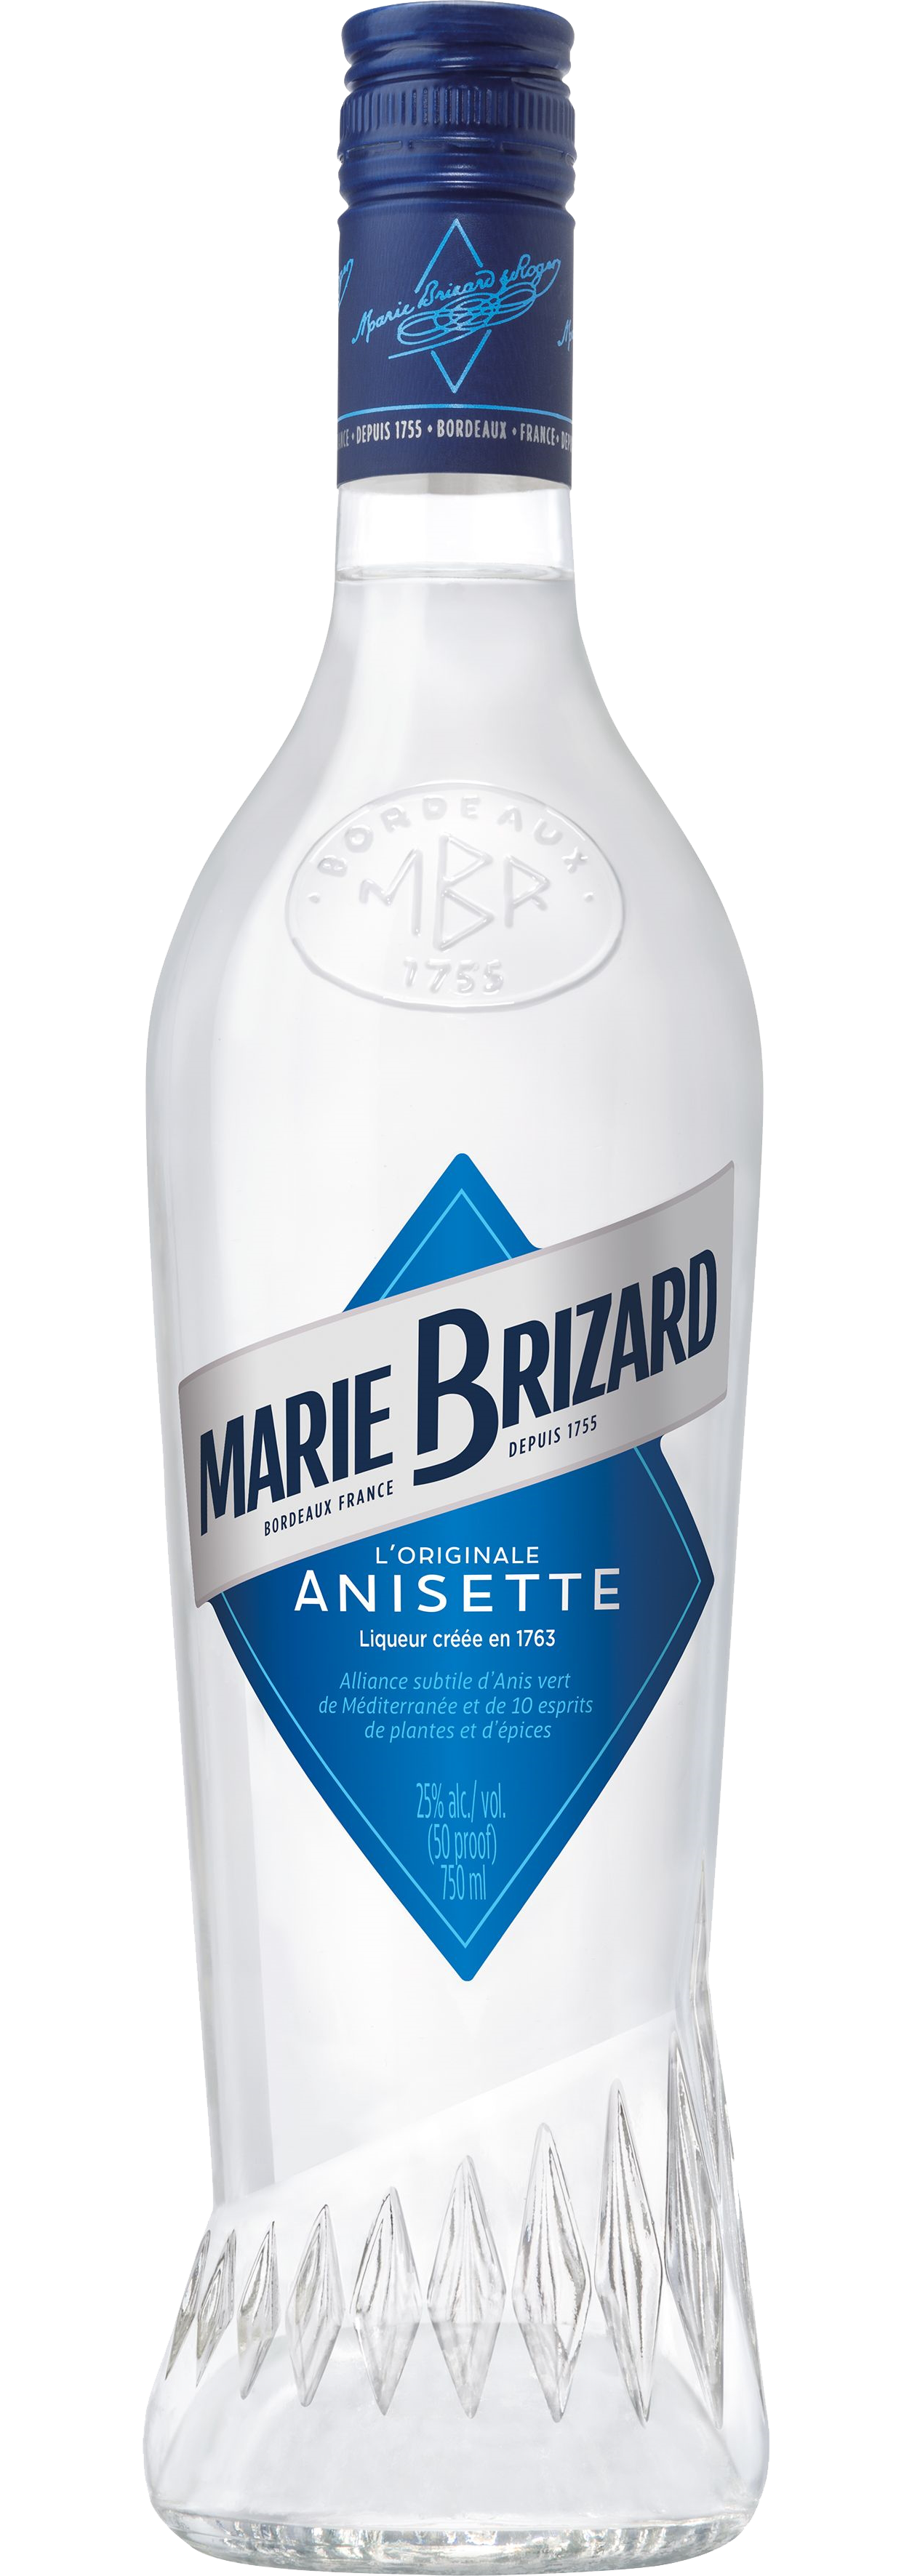 MARIE BRIZARD LIQUEUR ANISETTE 750ML - Remedy Liquor